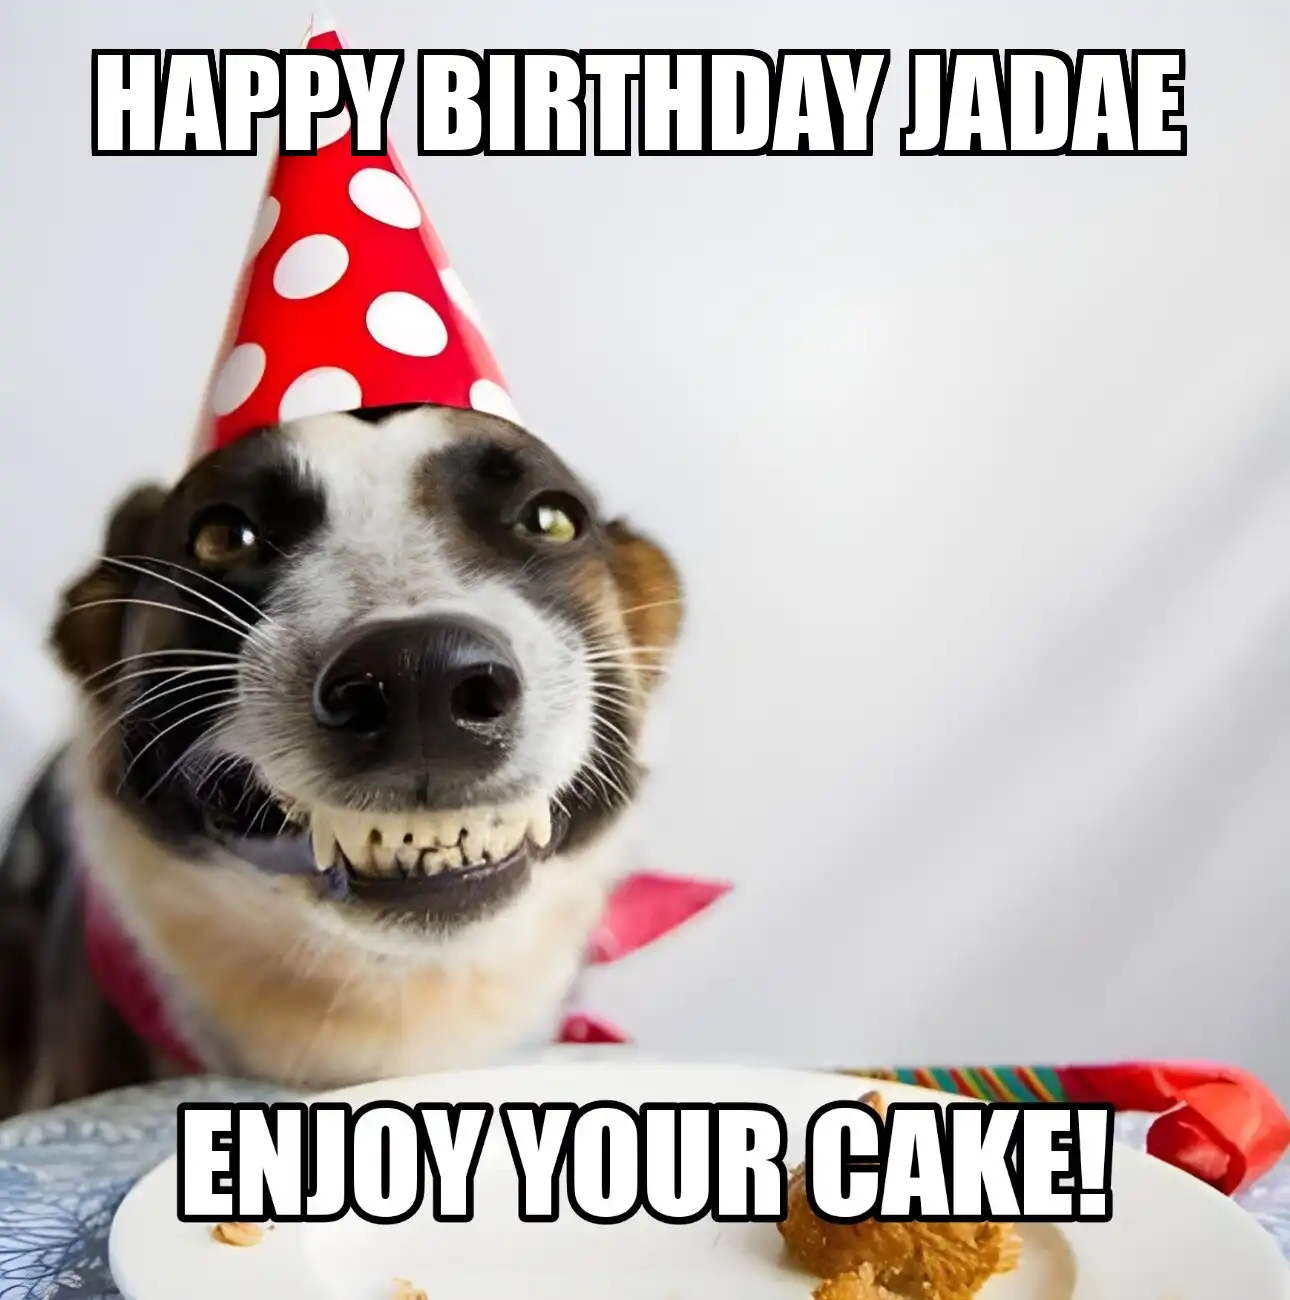 Happy Birthday Jadae Enjoy Your Cake Dog Meme